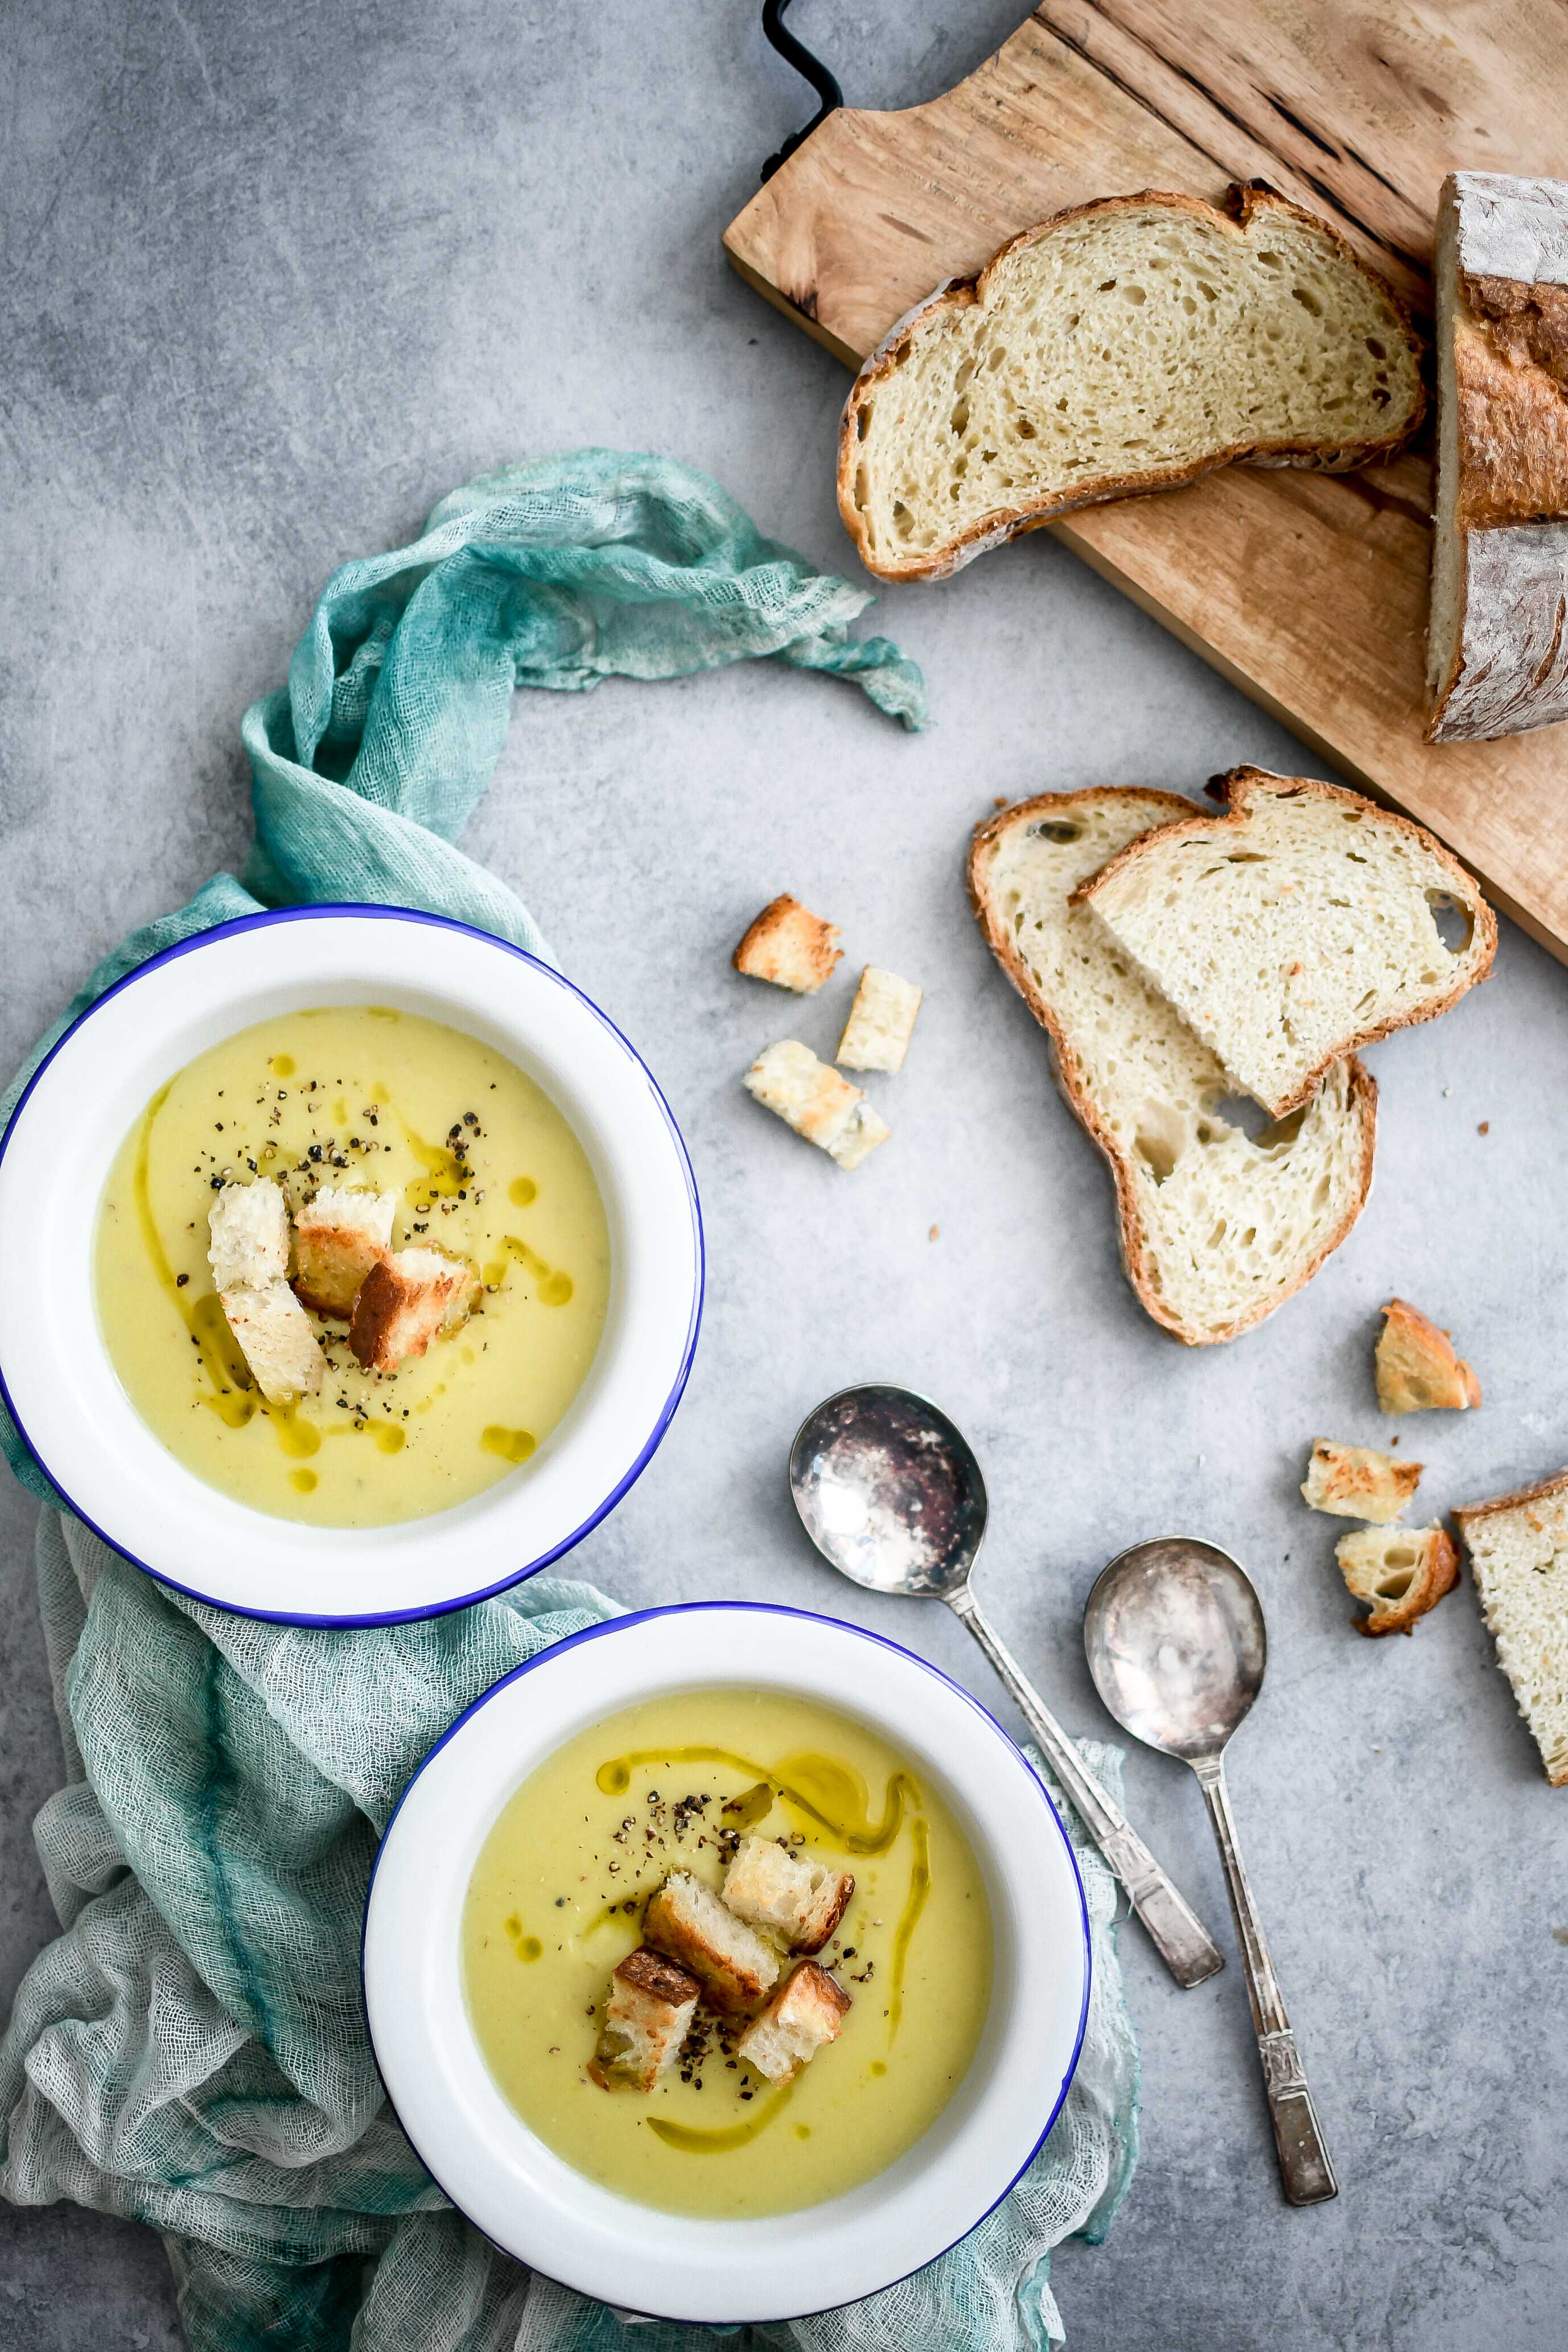 porovo-zemiakova polievka | potato leek soup | recipe | photography